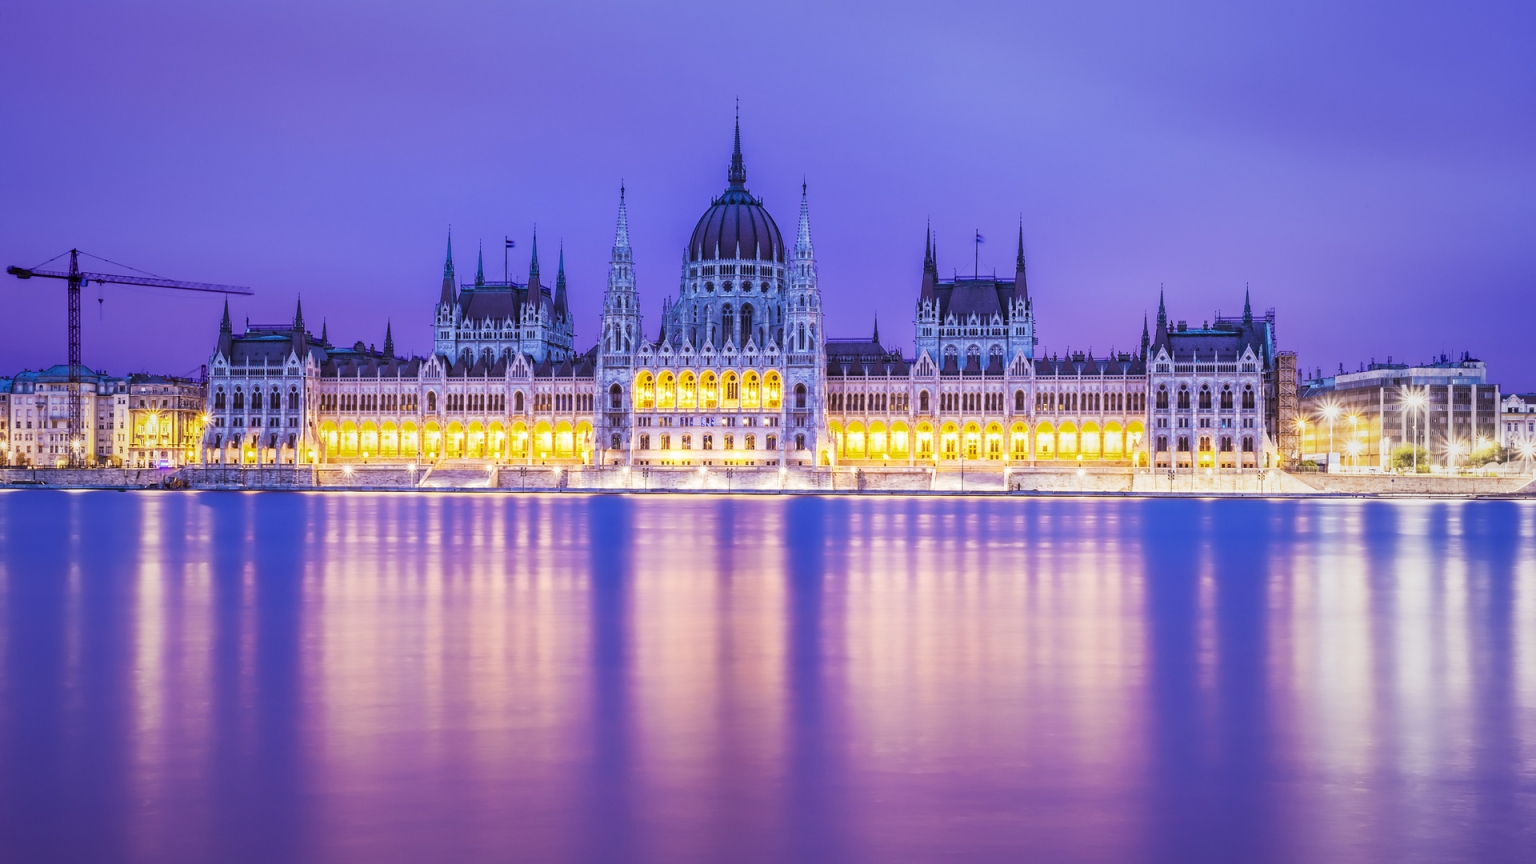 Budapest Parliament Building for 1536 x 864 HDTV resolution